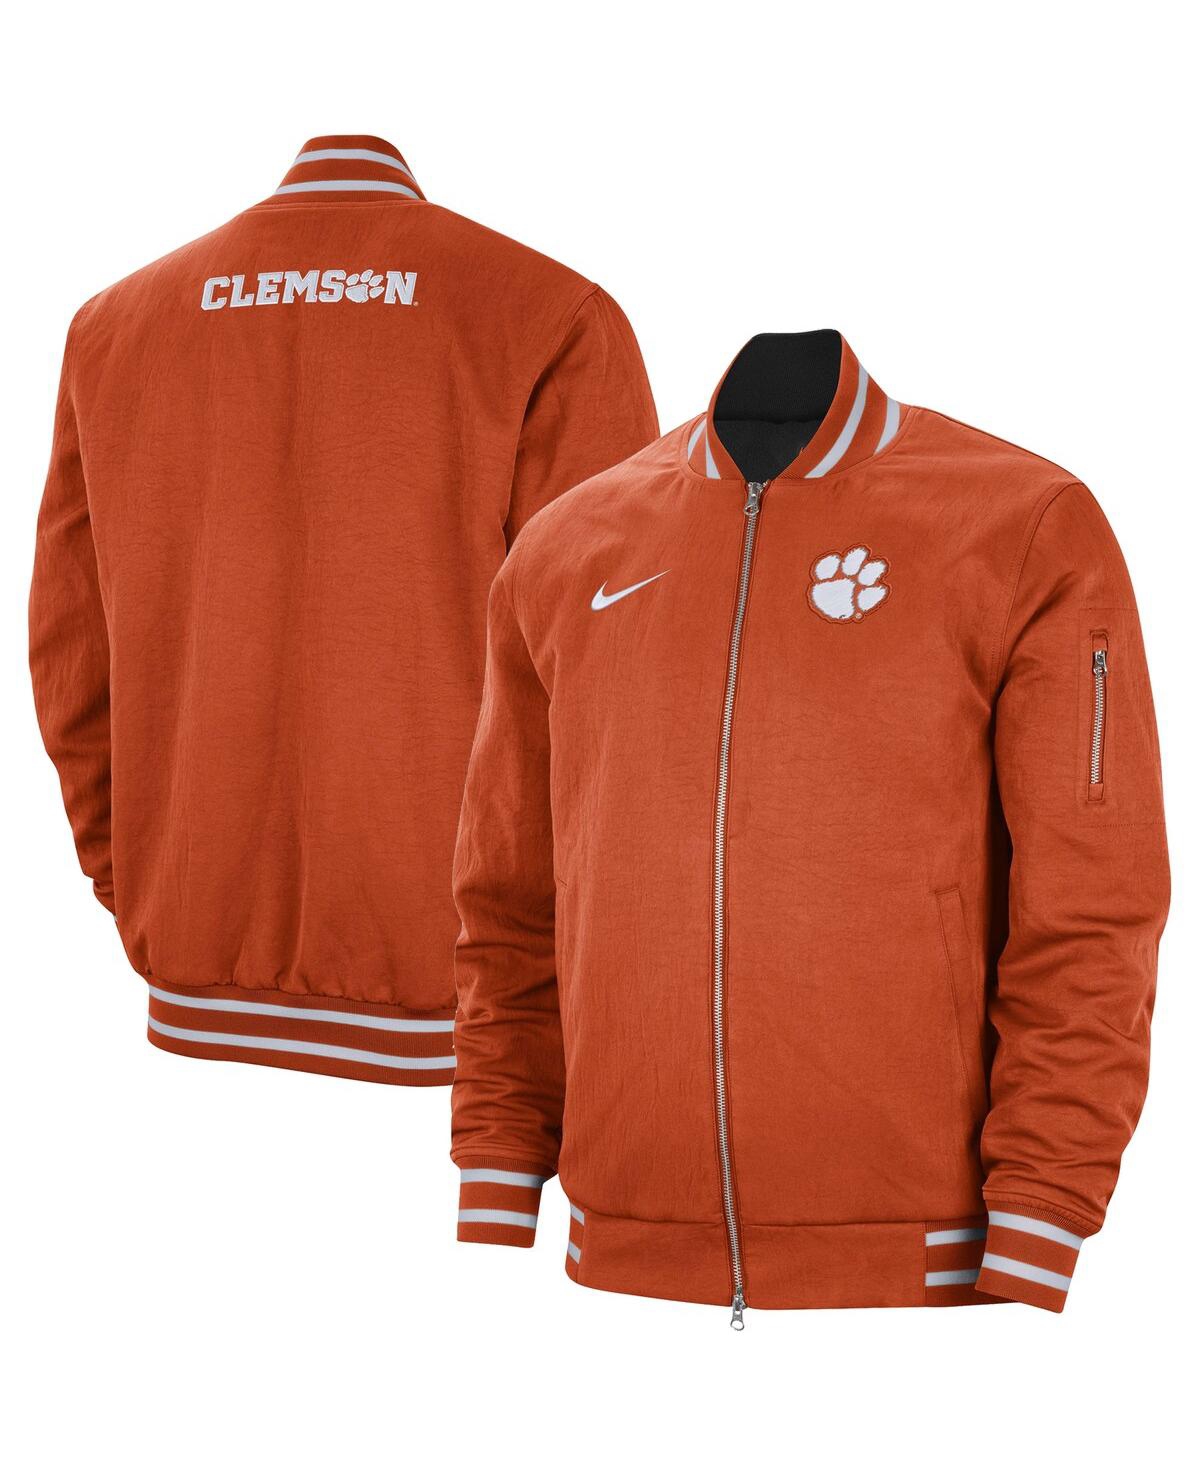 Men's Nike Orange Clemson Tigers Full-Zip Bomber Jacket - Orange